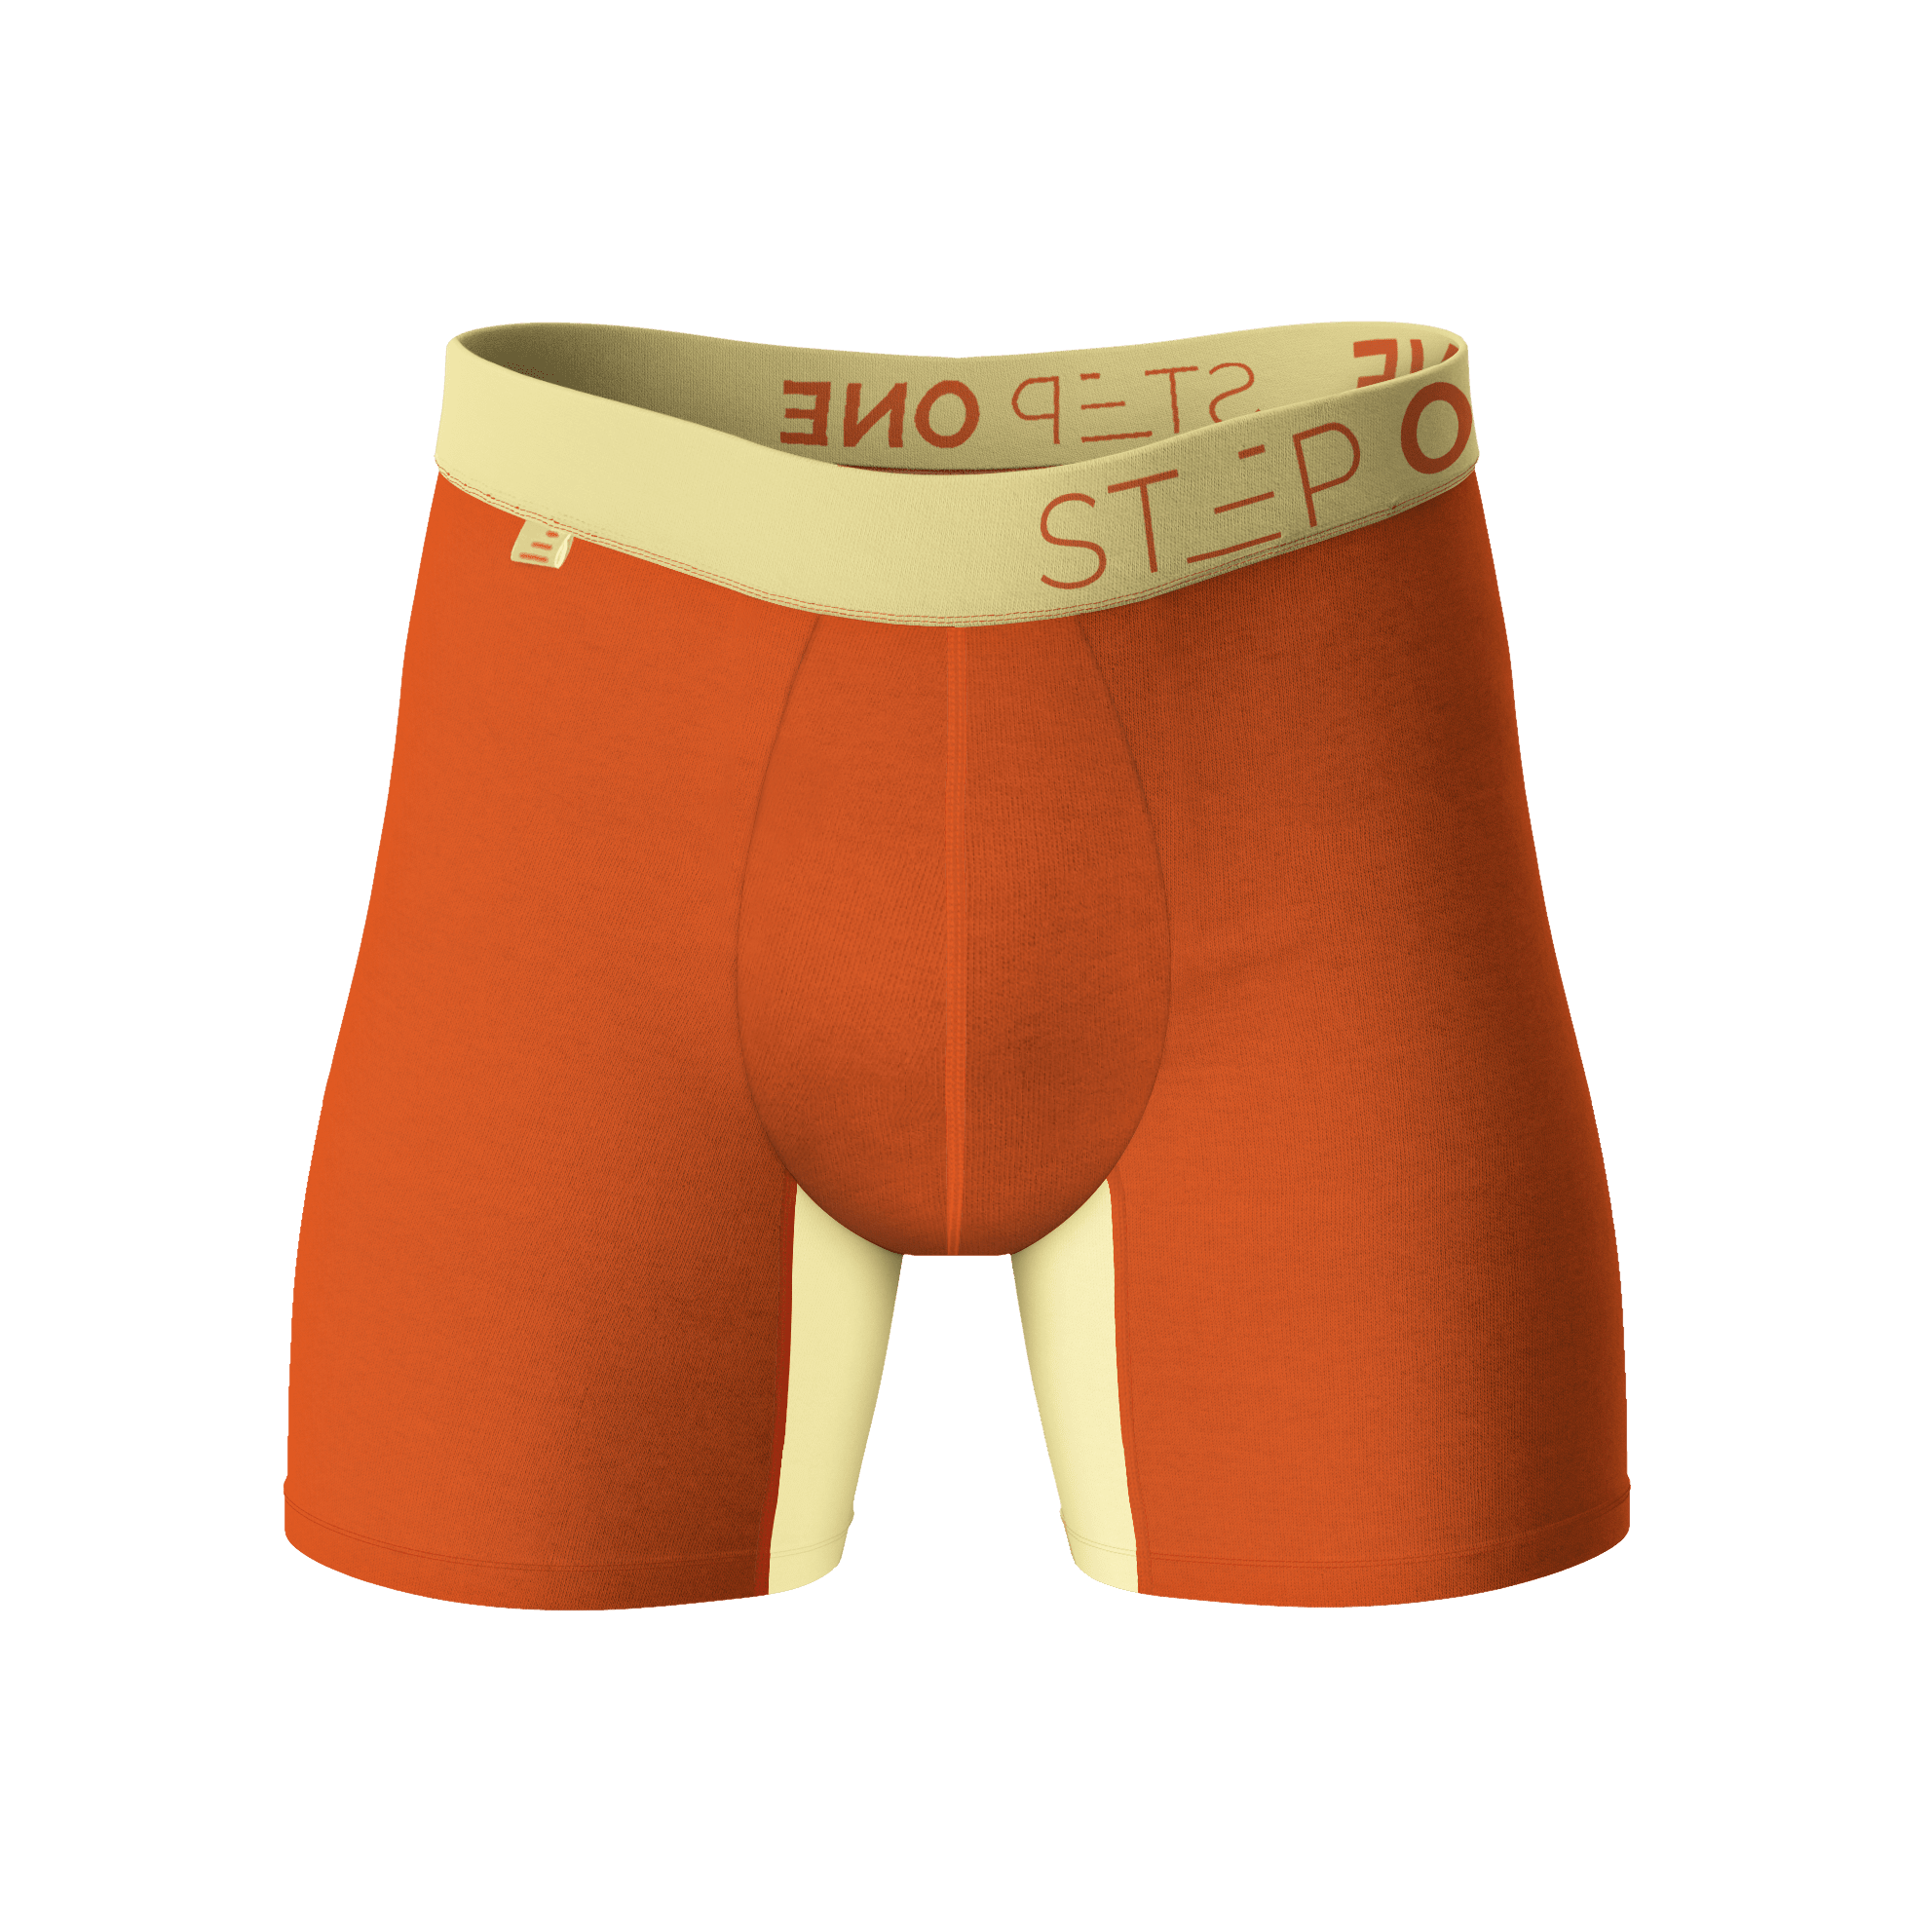 Boxer Brief - Donald Trunks | Step One Men's Underwear UK